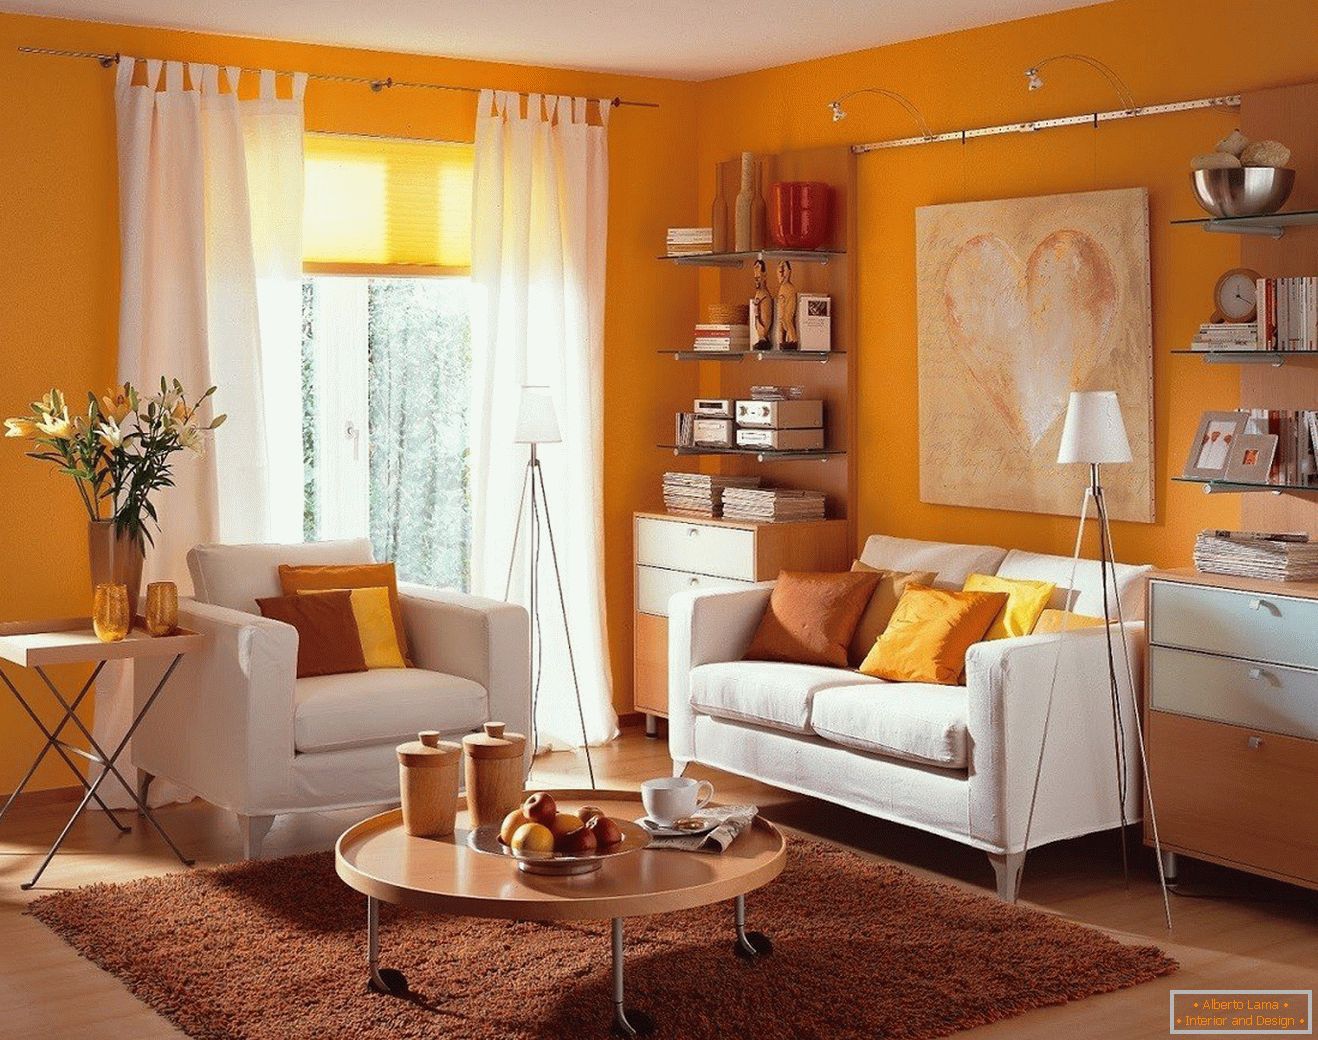 Obývací pokoj s oranžovými zdmi